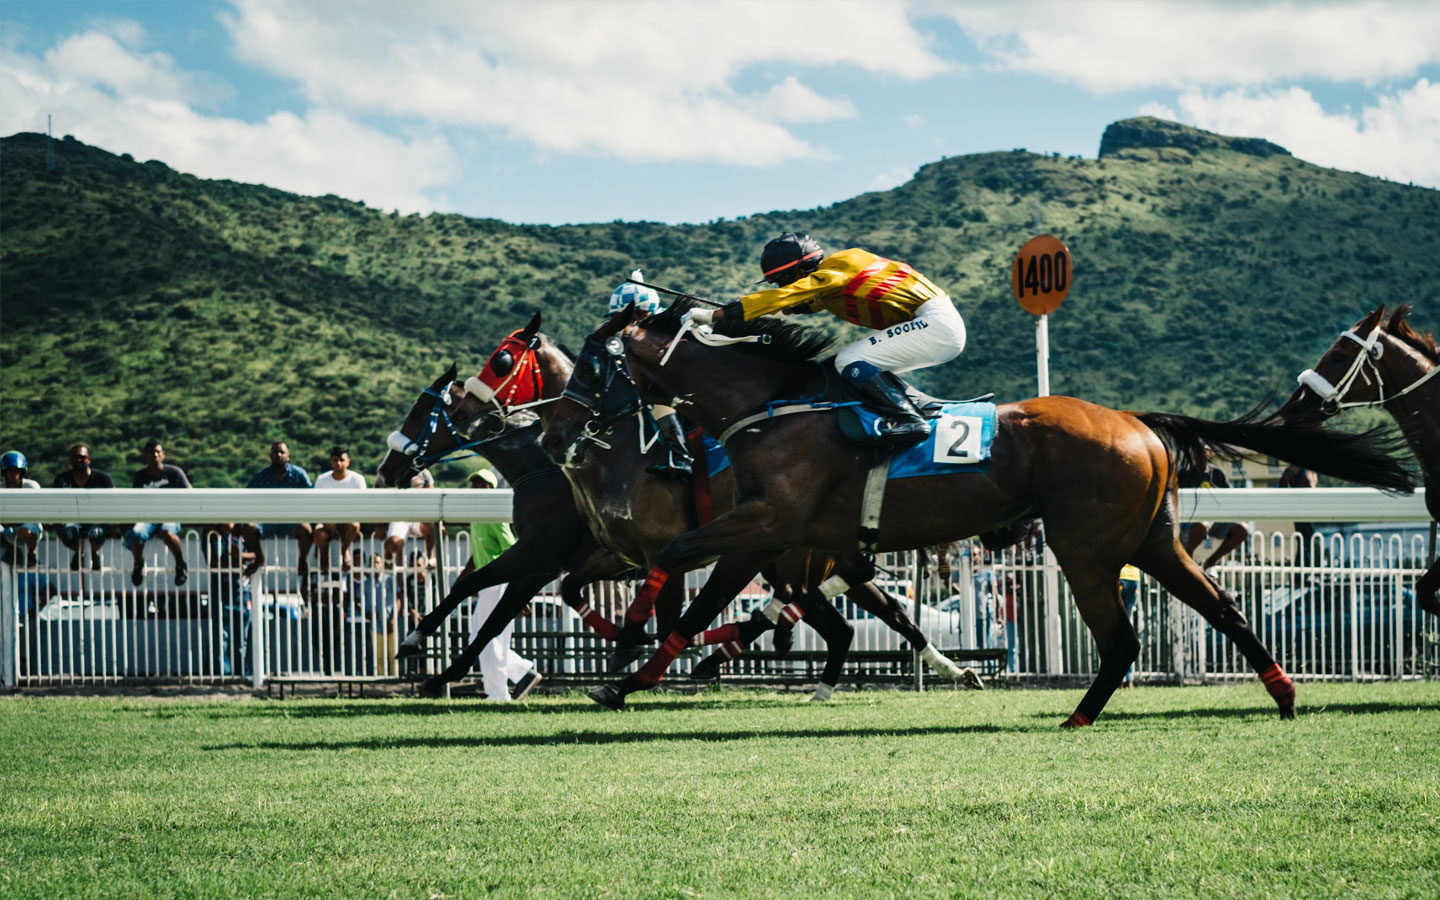 turffontein horse racing betting online